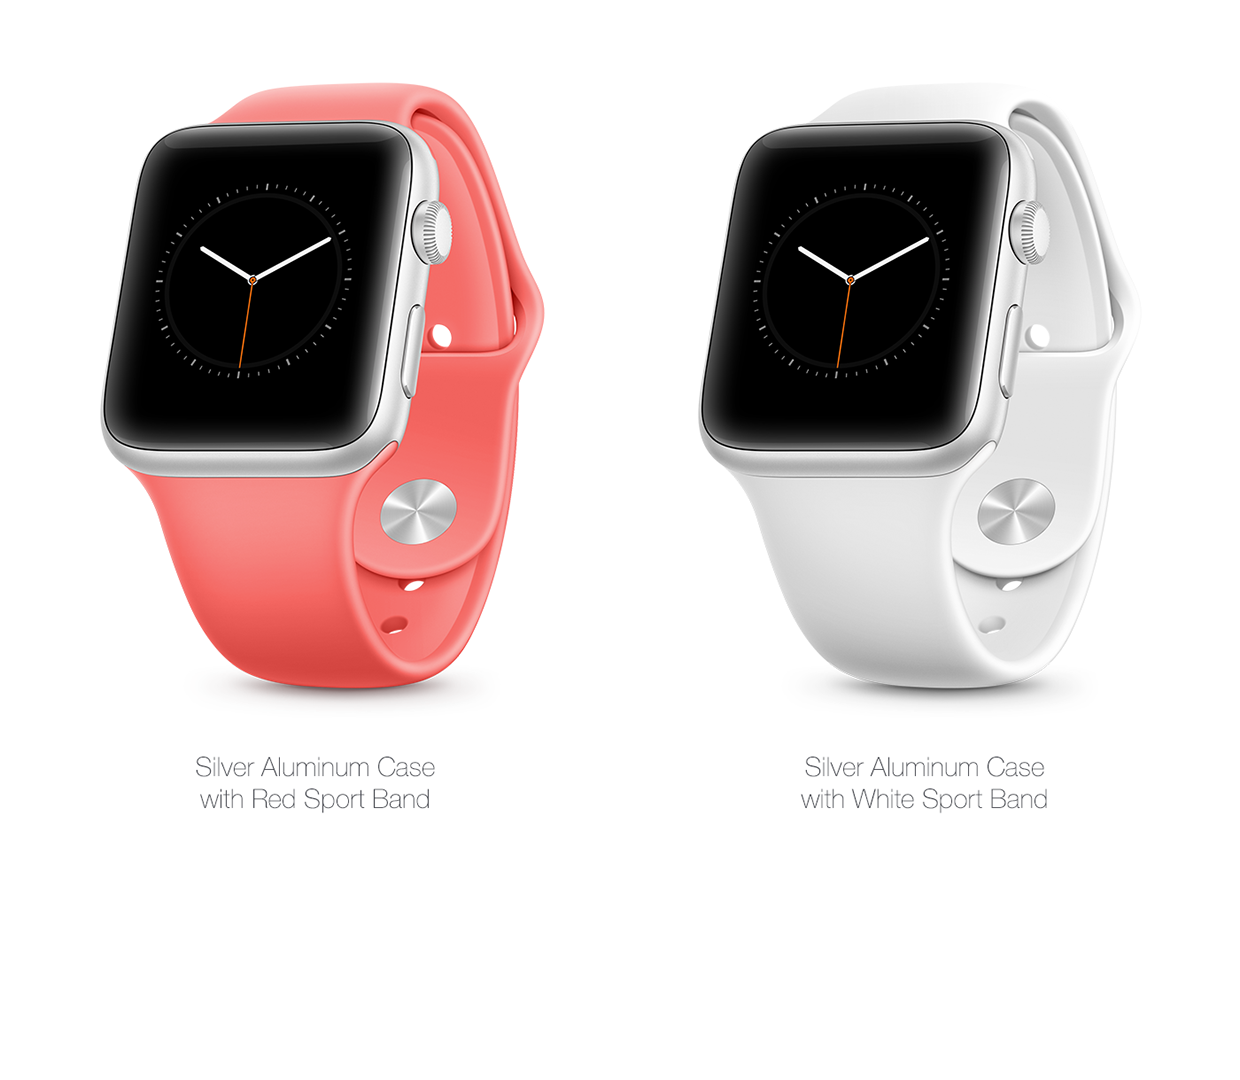 Mockup Gratuit Apple iPhone 6 et Apple Watch - Free Mockup iPhone 6 and Apple Watch - 4